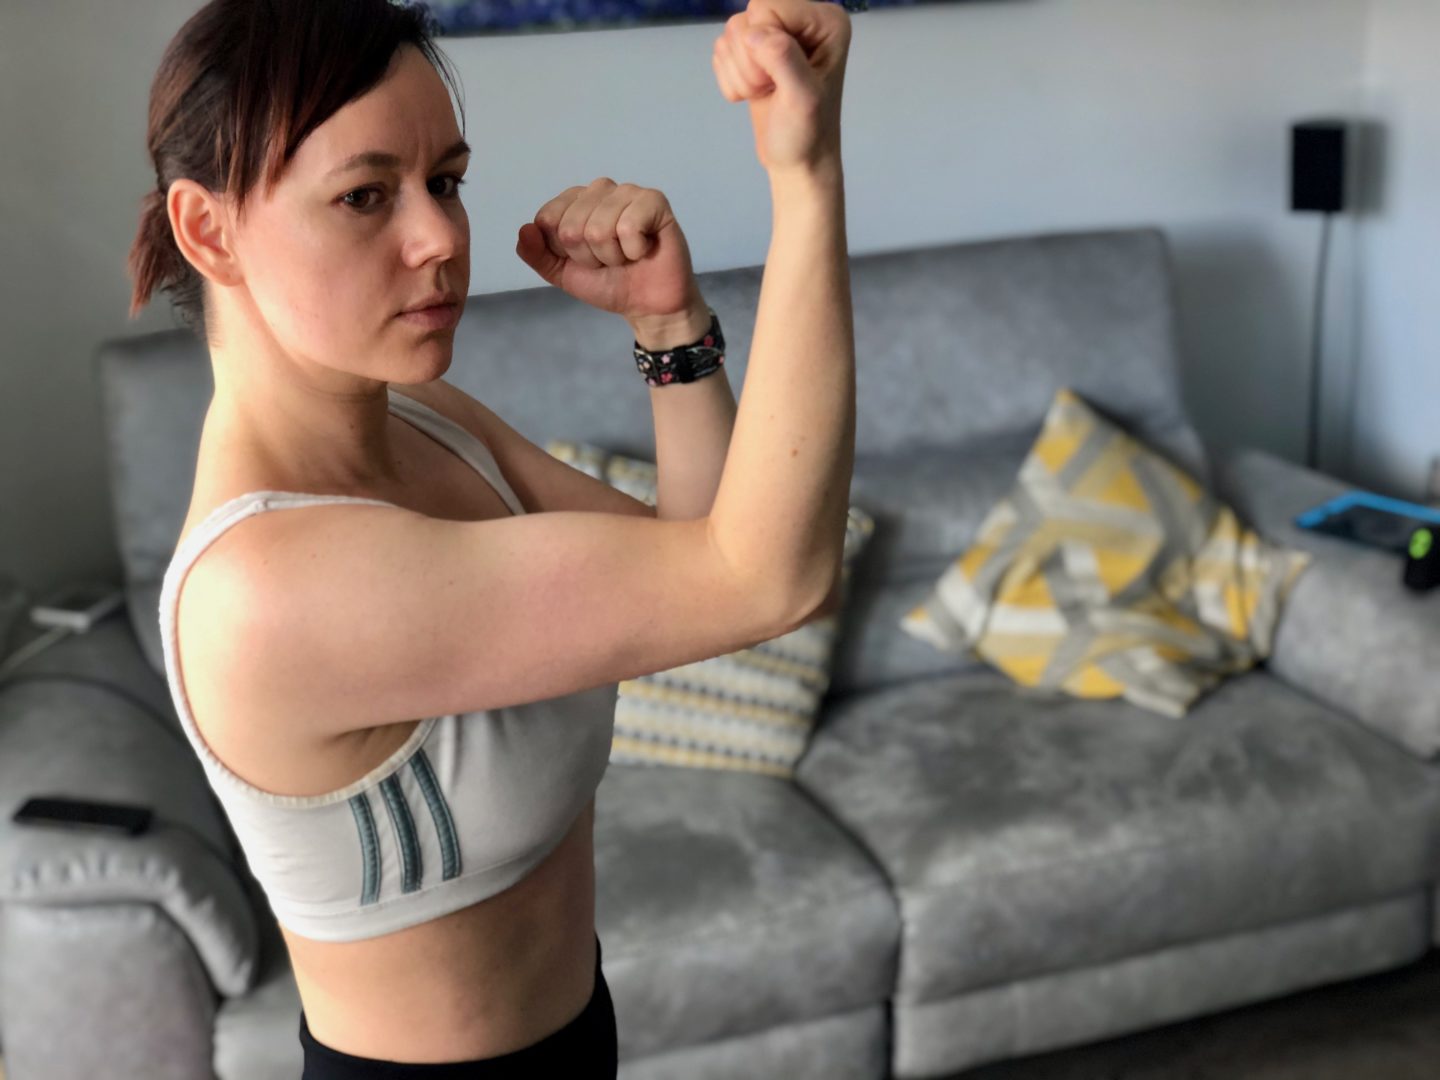 A woman flexes her biceps in a sports bra